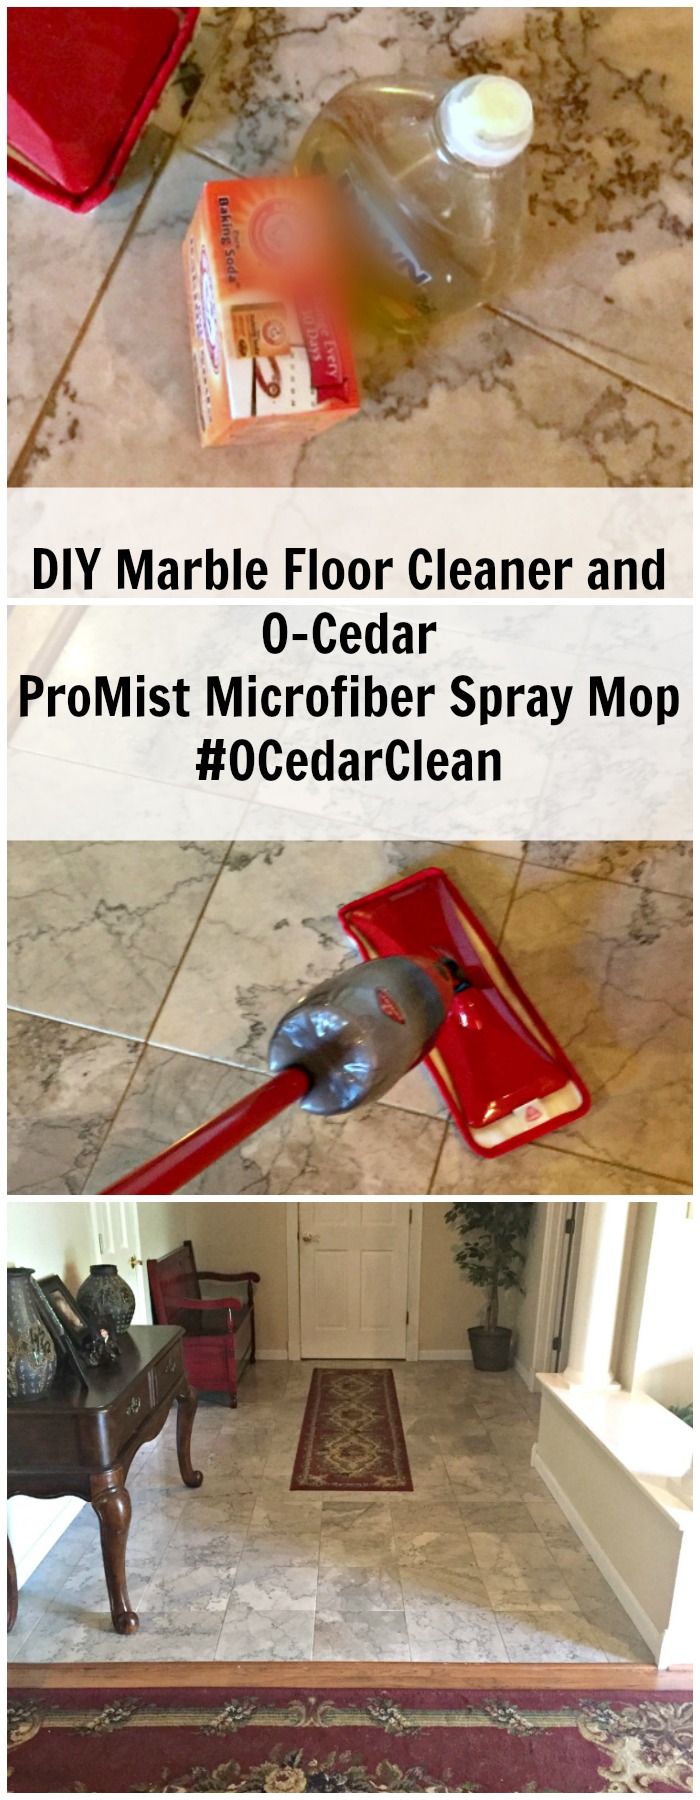 O-Cedar ProMist Microfiber Spray Mop from Walmart